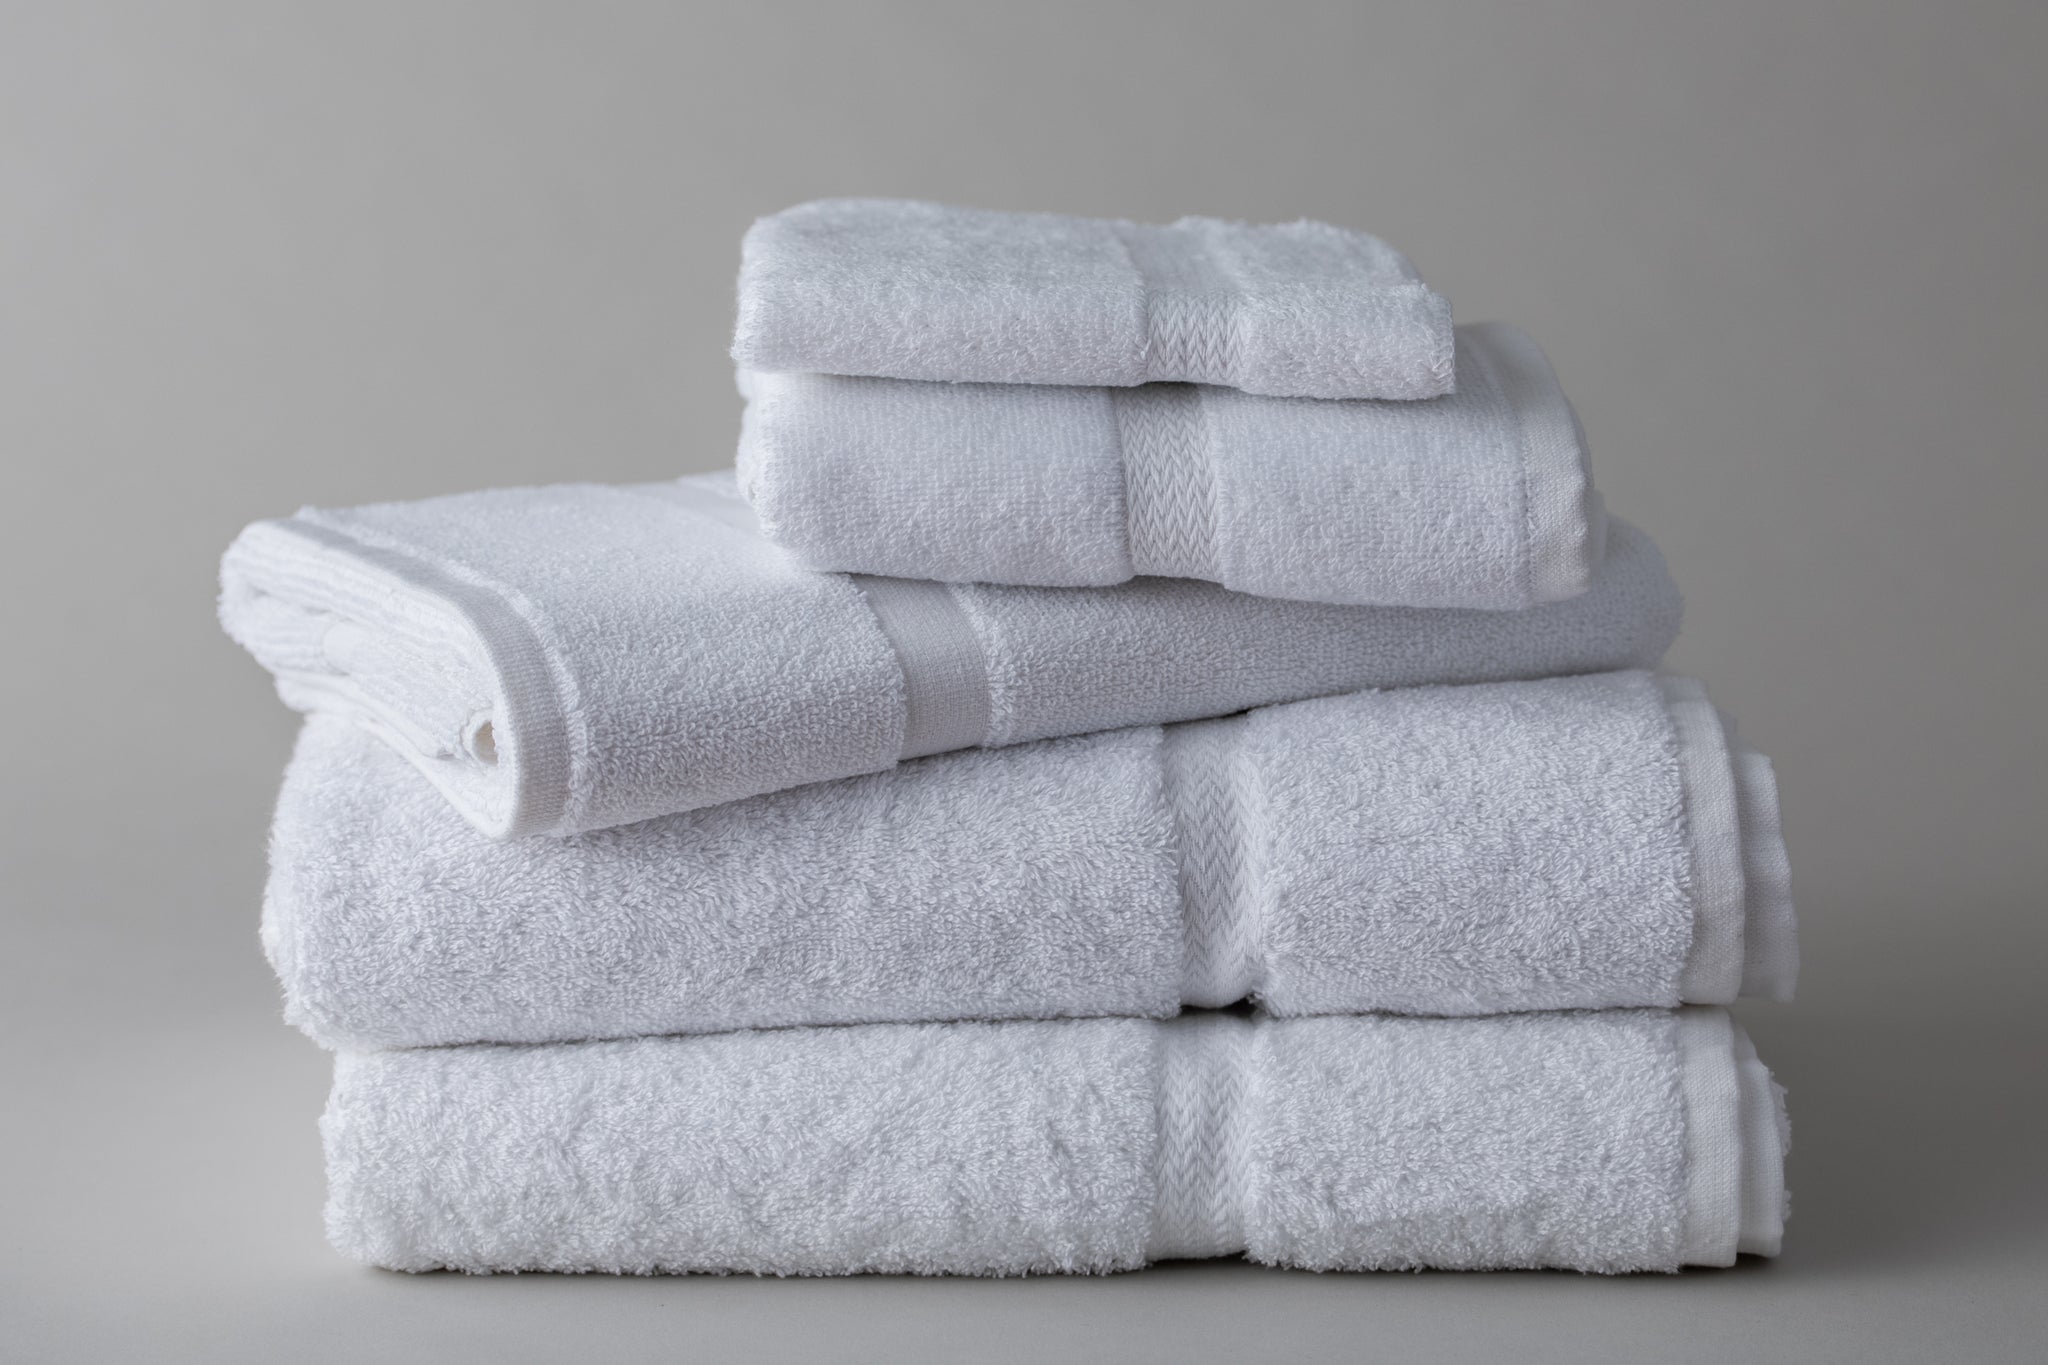 Luxury Hotel Duchess Geometric Bath Towels